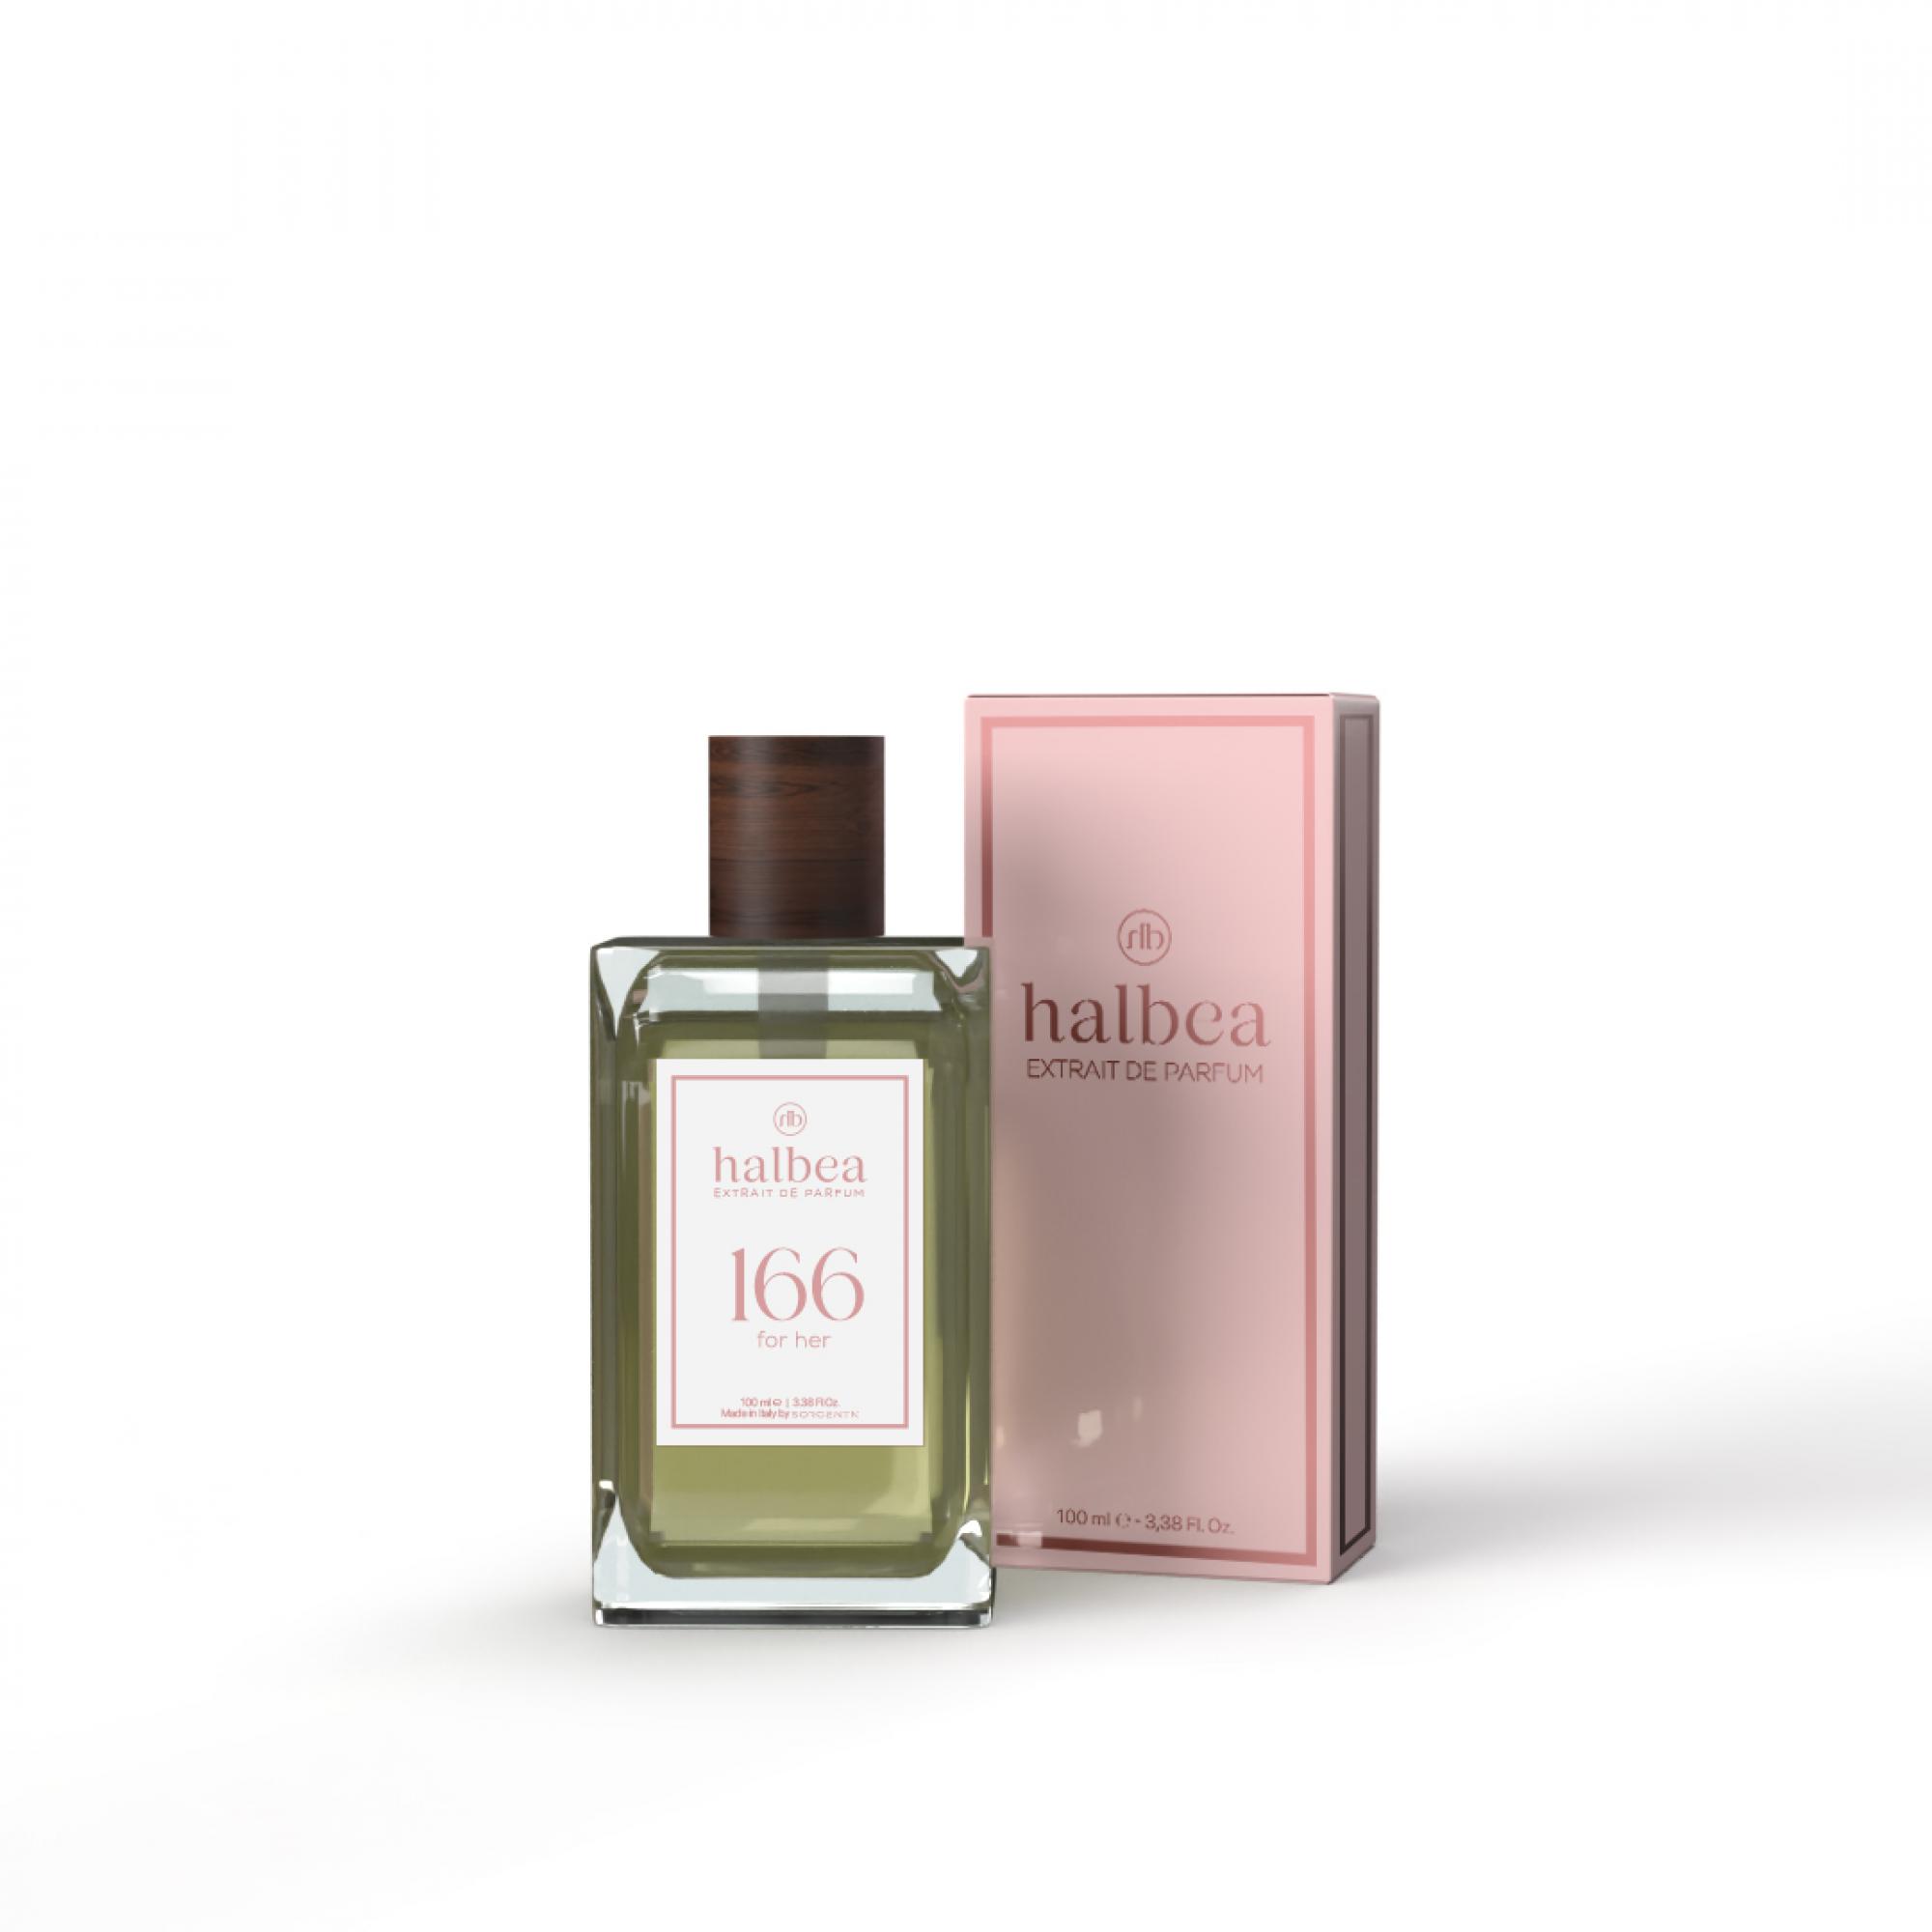 Halbea Parfum Nr. 166 insp. by Narciso Rodriguez Black Bottle 100ml Sorgenta